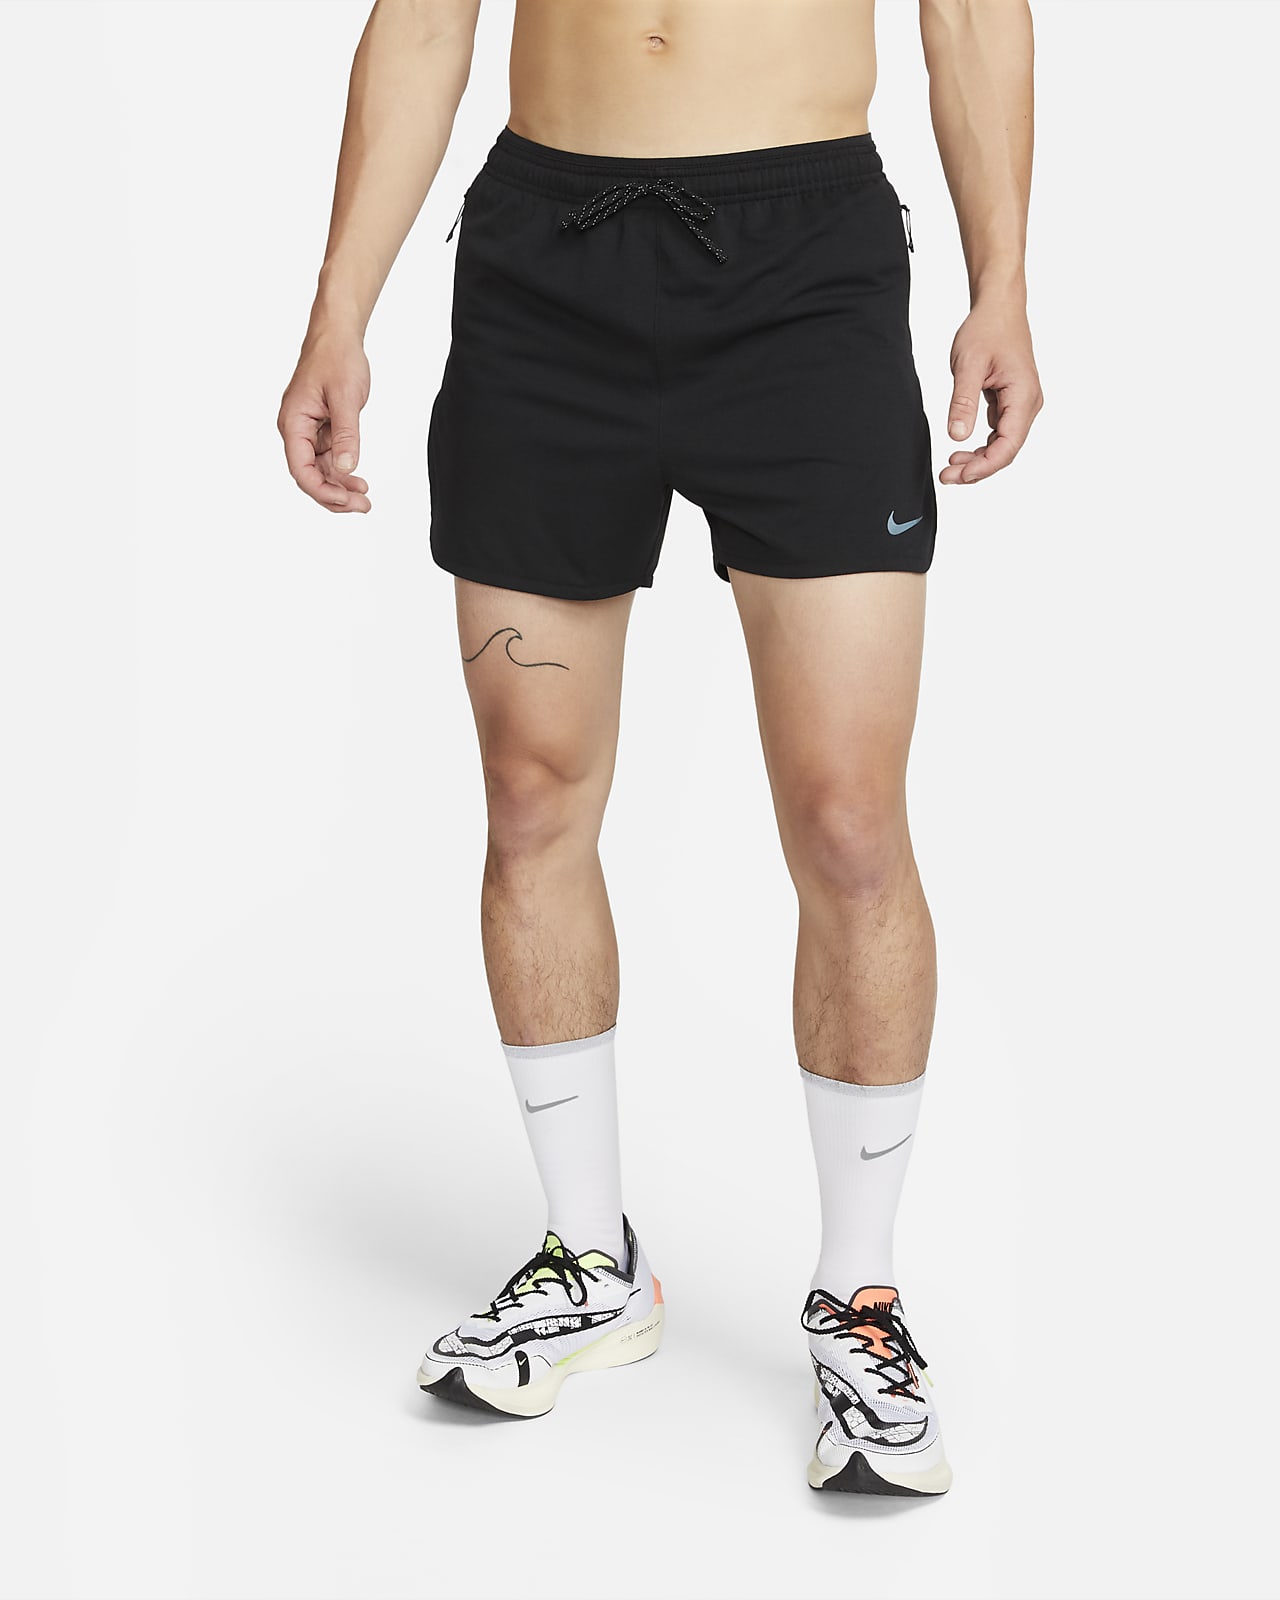 Nike Men's Dri-FIT Stride 2-In-1 Running Short $ 65